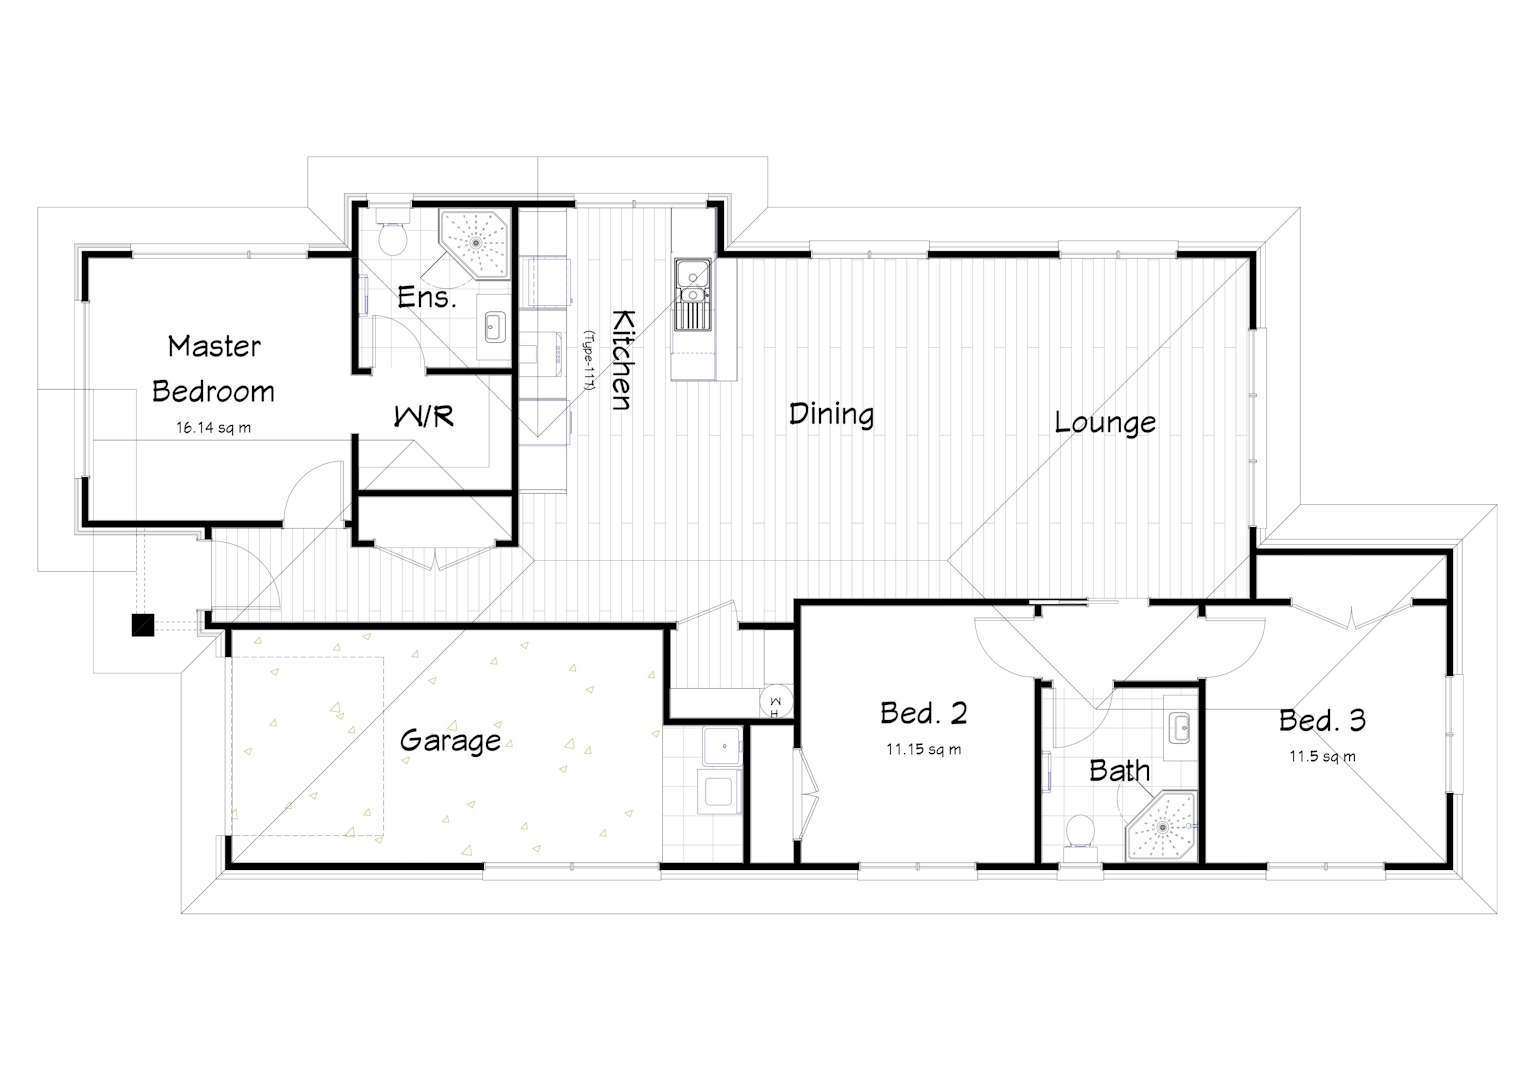 Lot 6 Anne Burton Drive floor plan